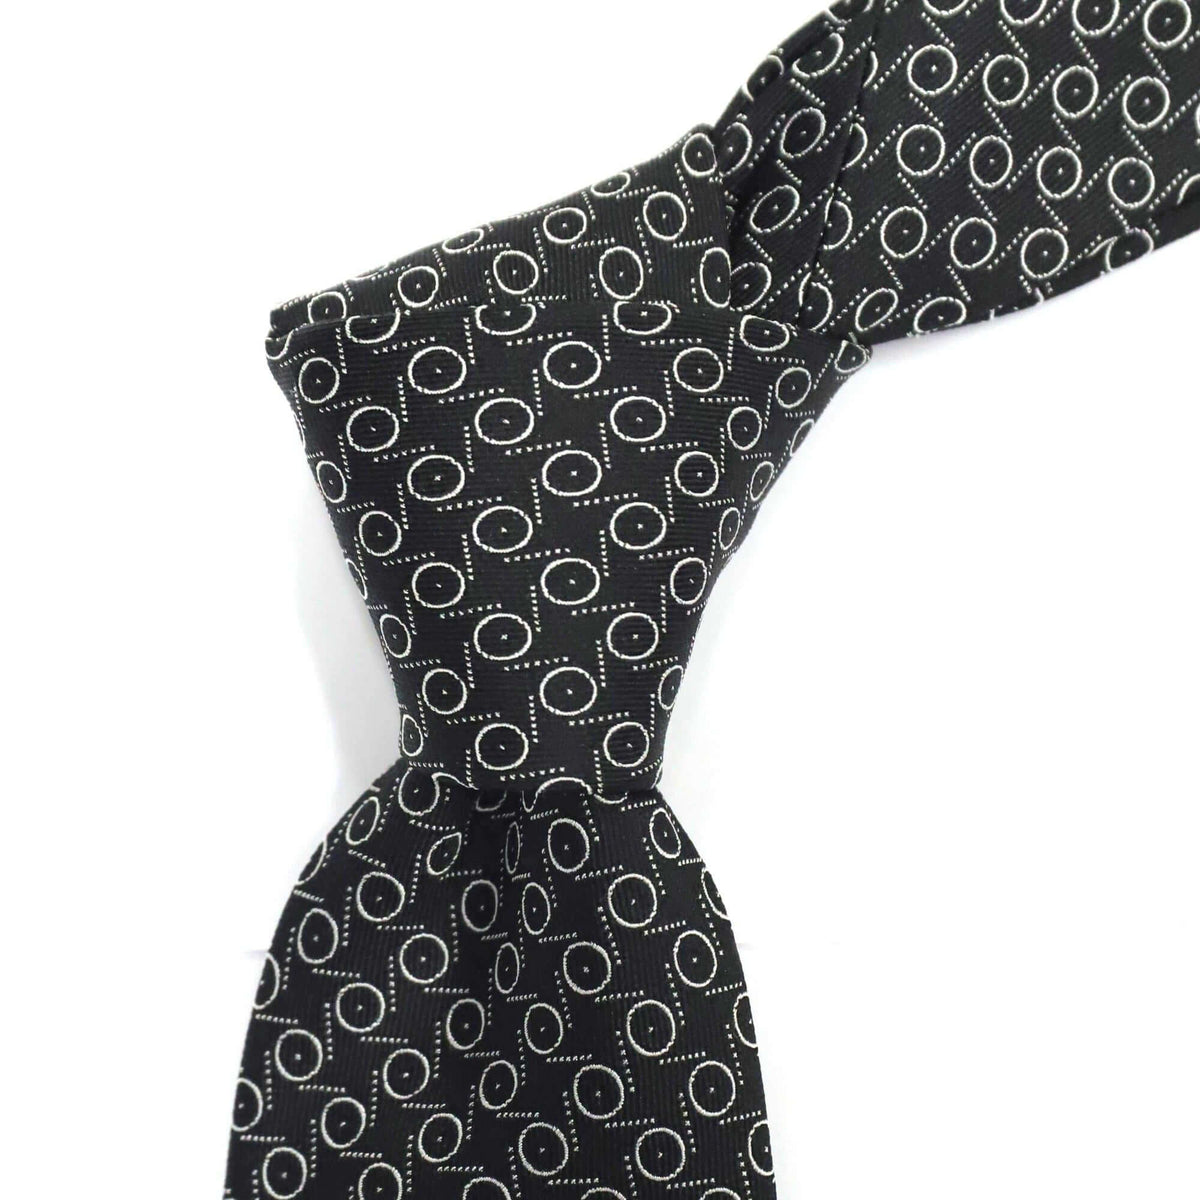 Black with White Circle Pattern Silk Tie-Cufflinks.com.sg | Neckties.com.sg